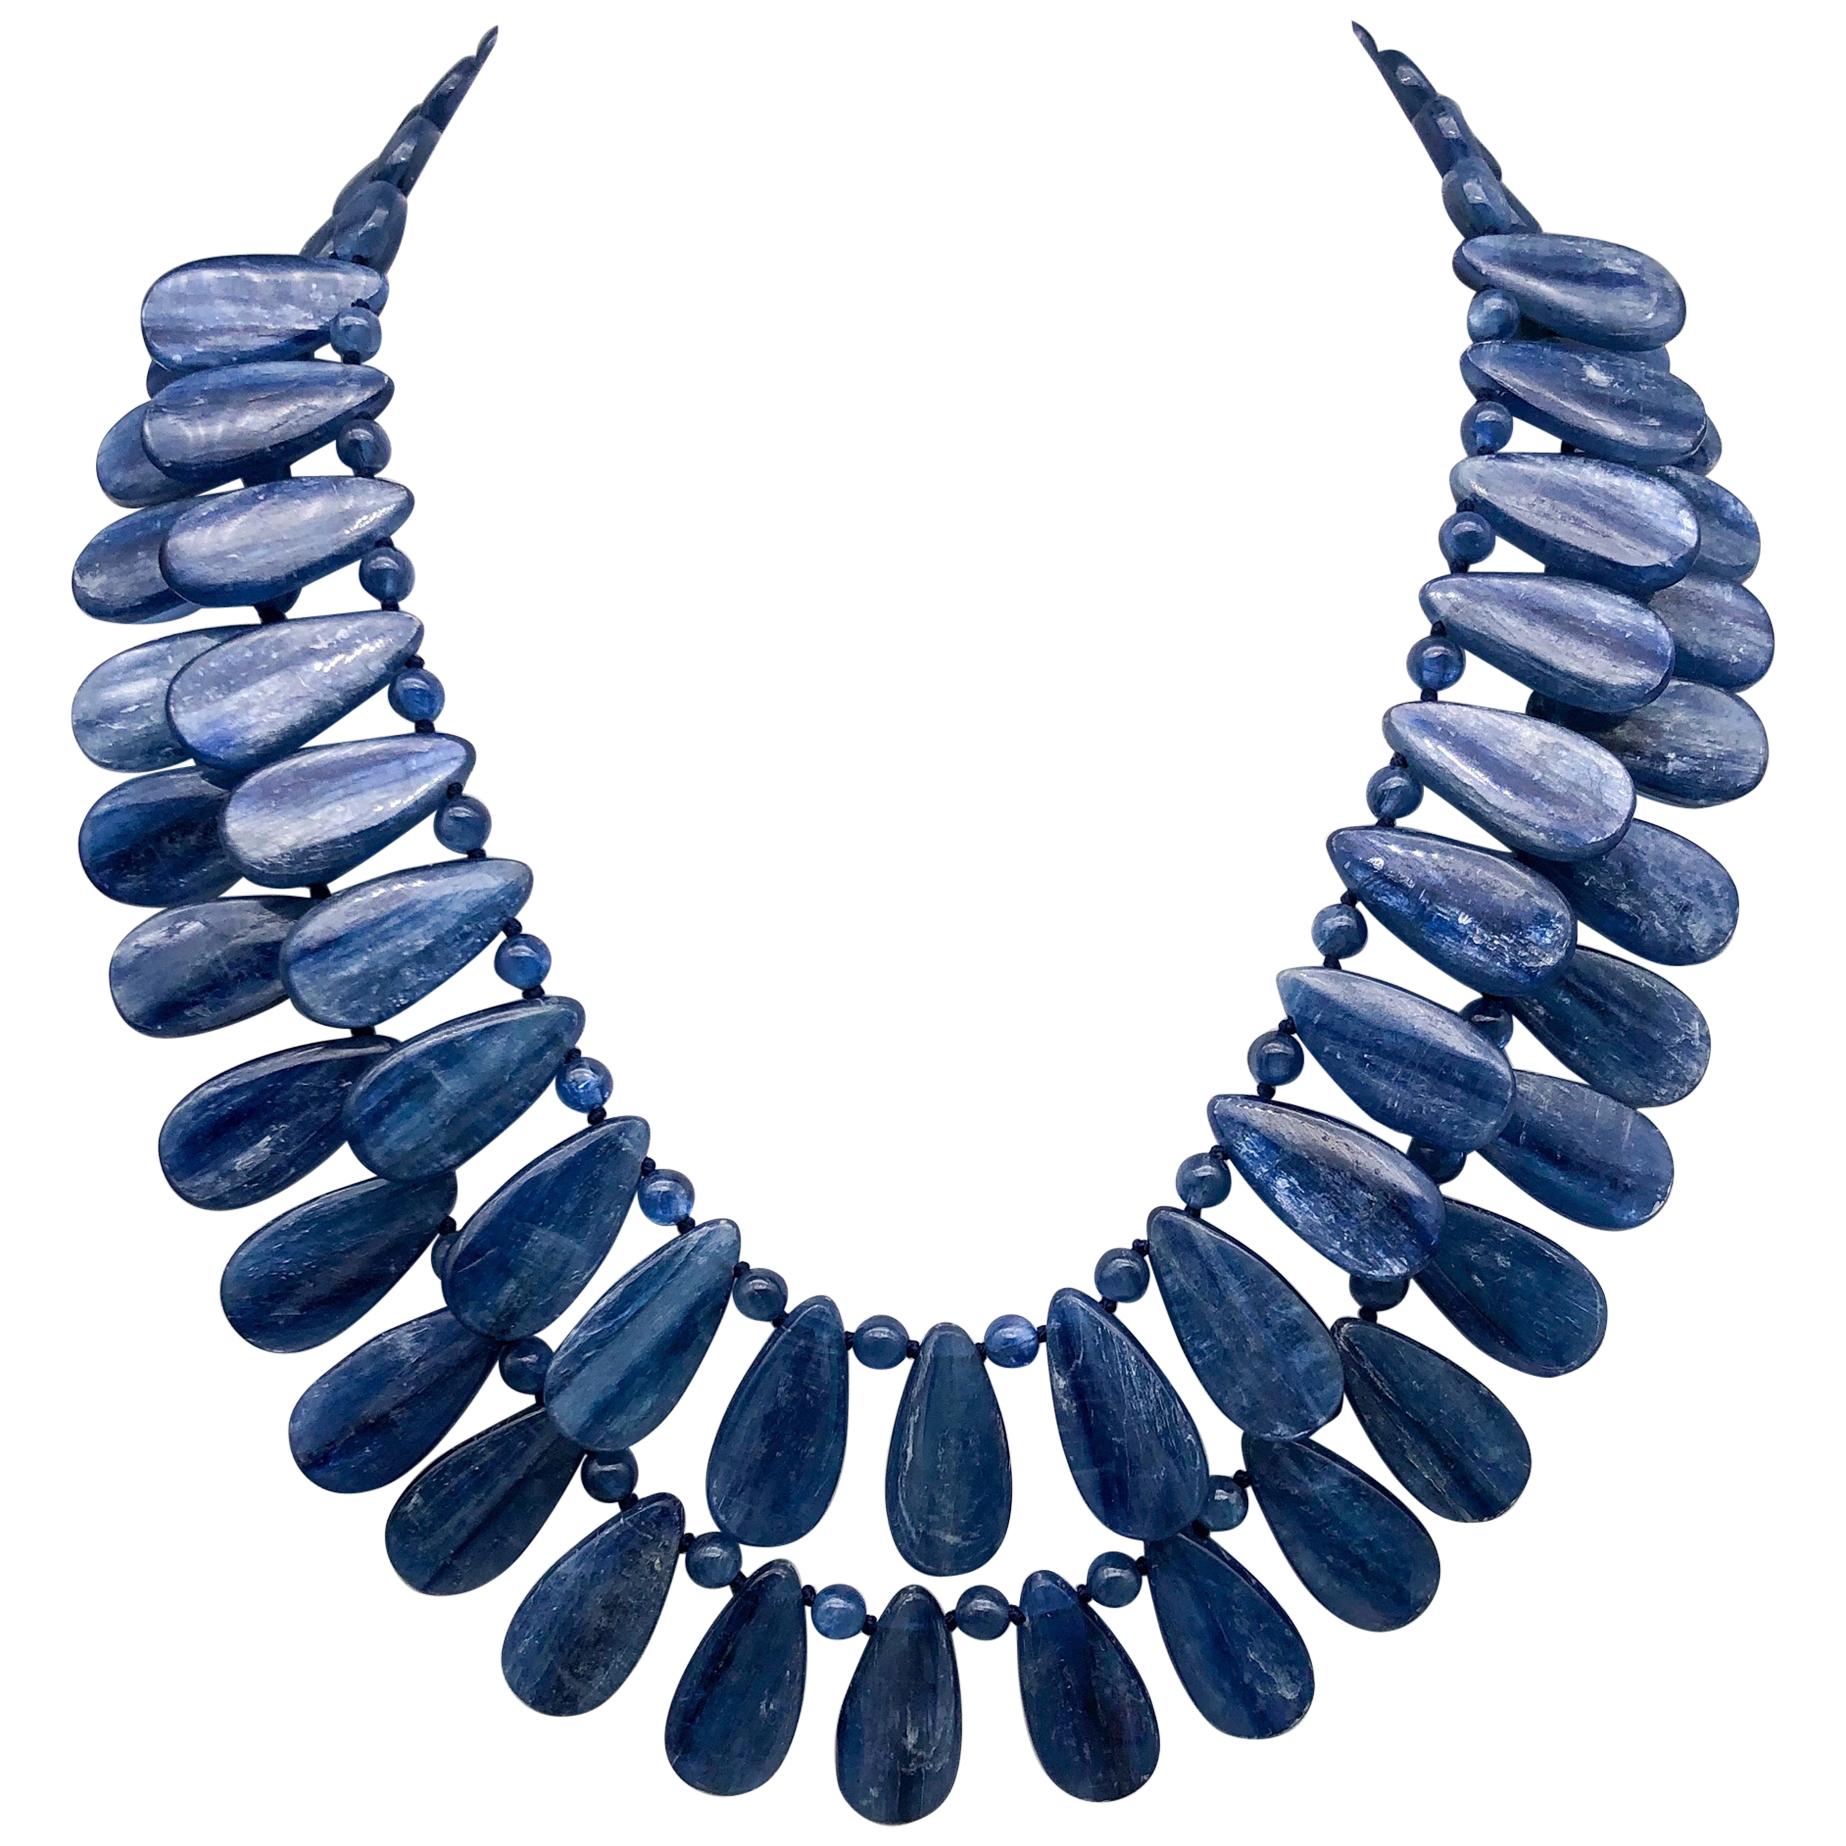 A.Jeschel A True Blue Kyanite 2 Strand Necklace. For Sale